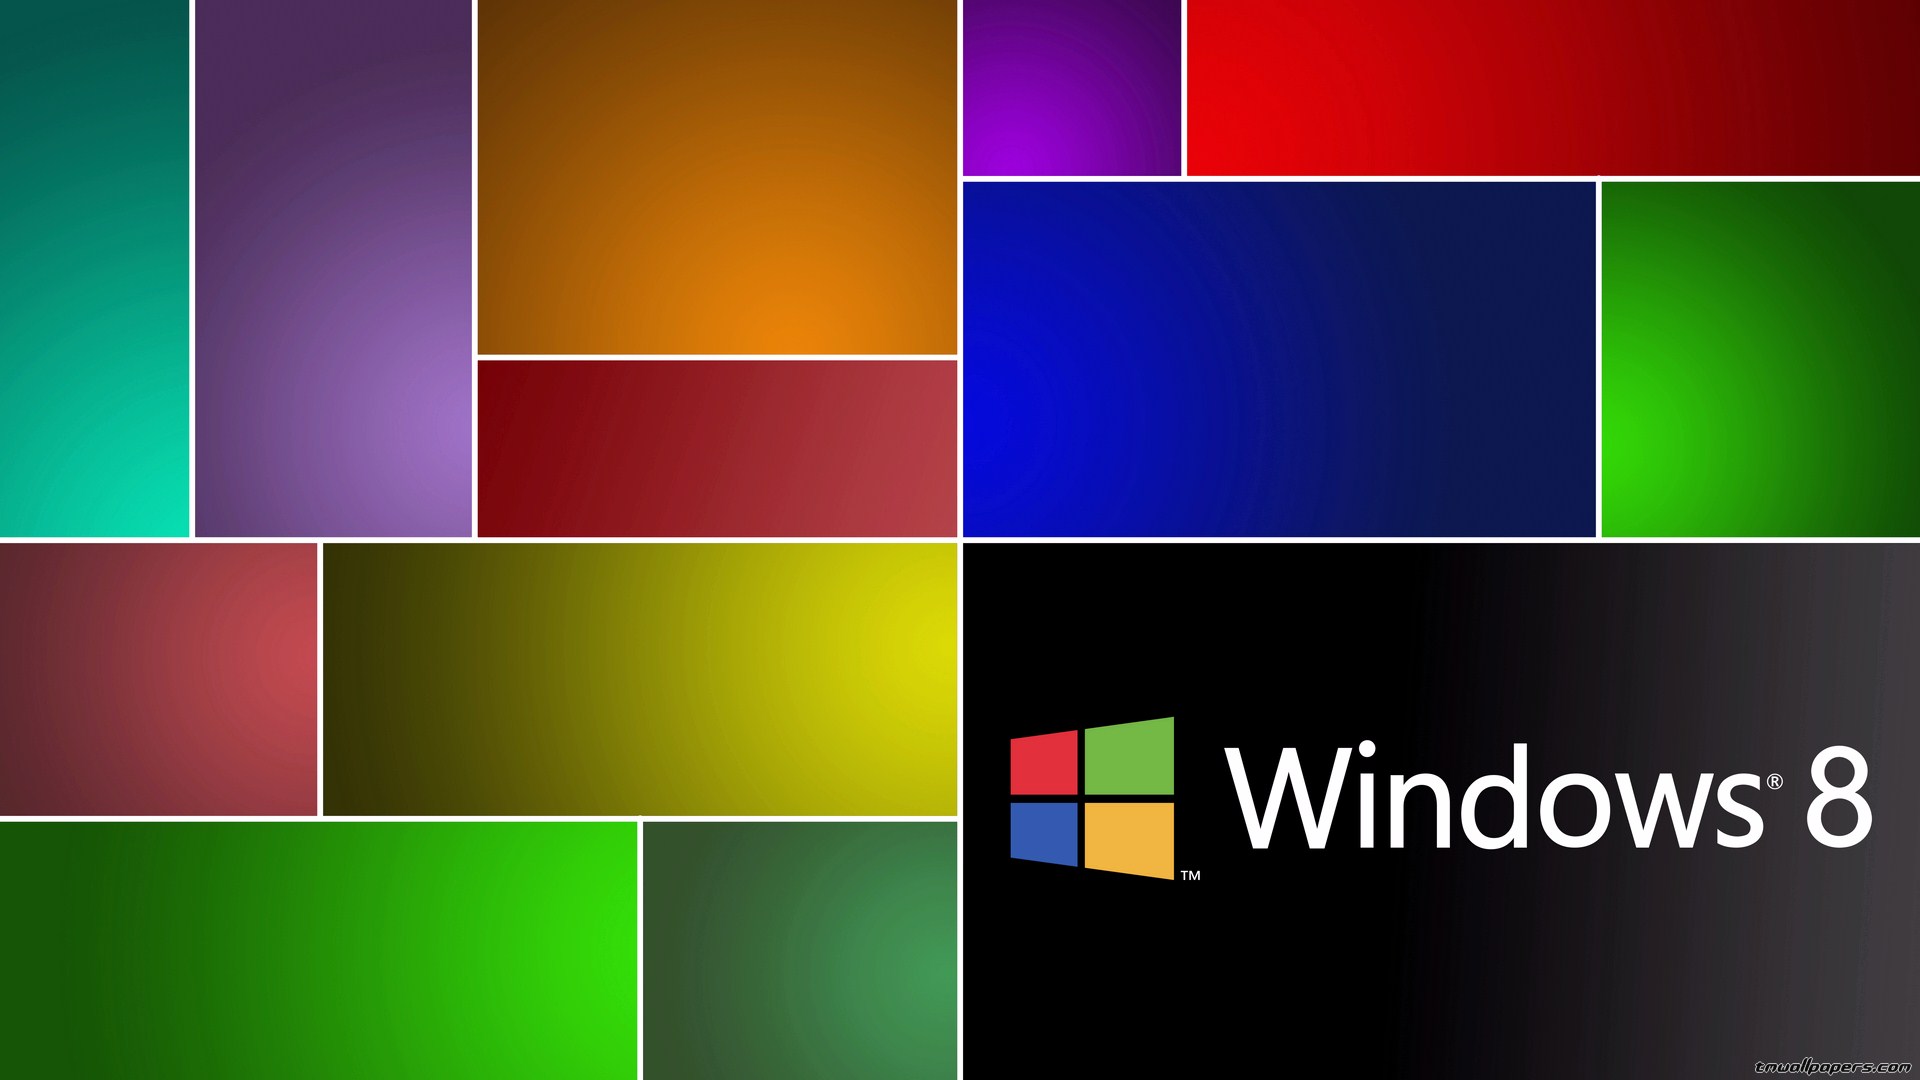 Windows 8 Wallpaper 1920x1080 Wide wallpapers windows 8 1920x1080